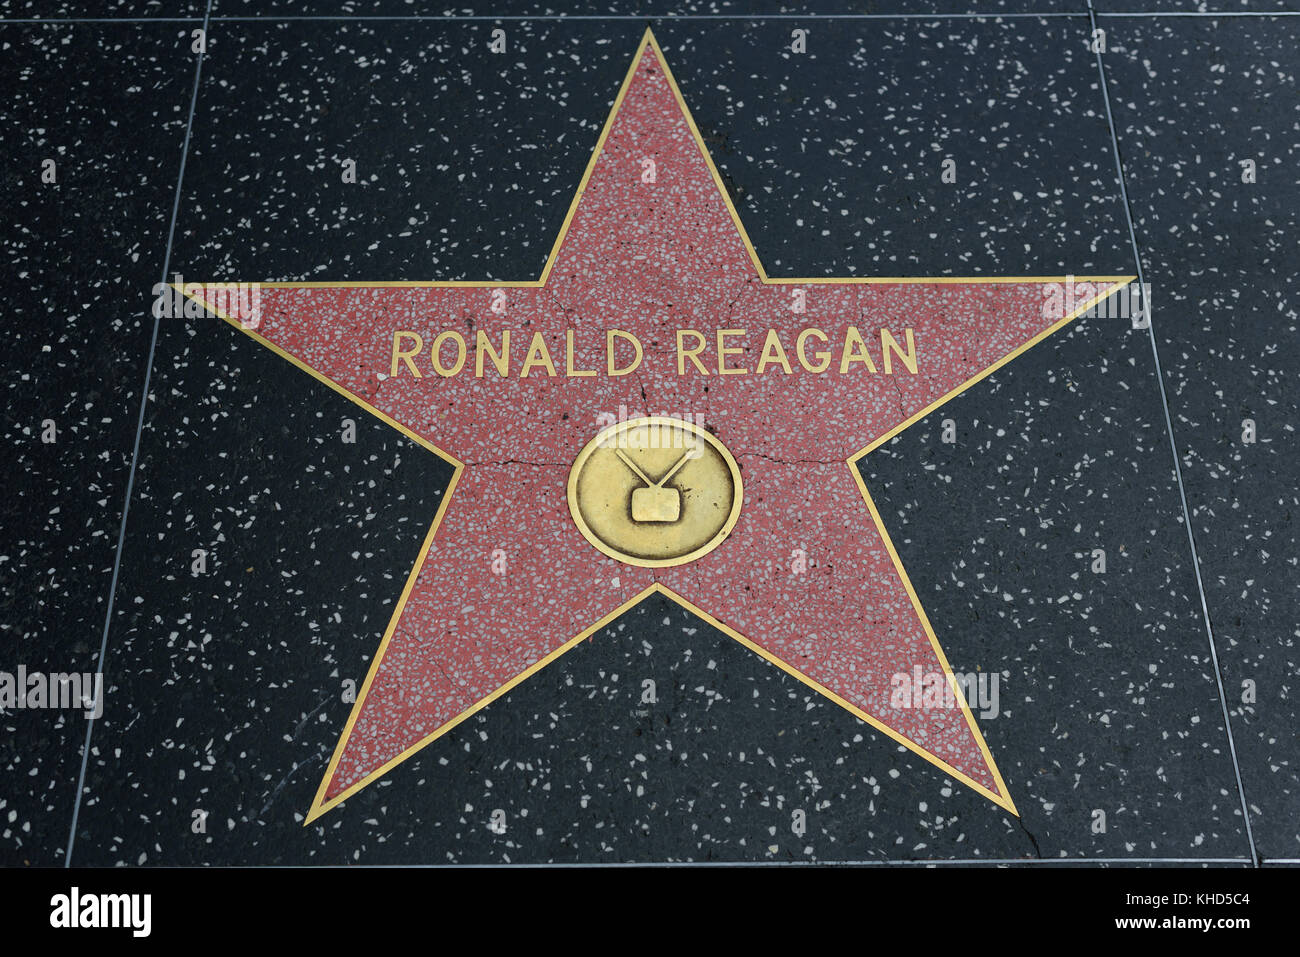 HOLLYWOOD, CA - DEZEMBER 06: Ronald Reagan Star auf dem Hollywood Walk of Fame in Hollywood, Kalifornien am 6. Dezember 2016. Stockfoto